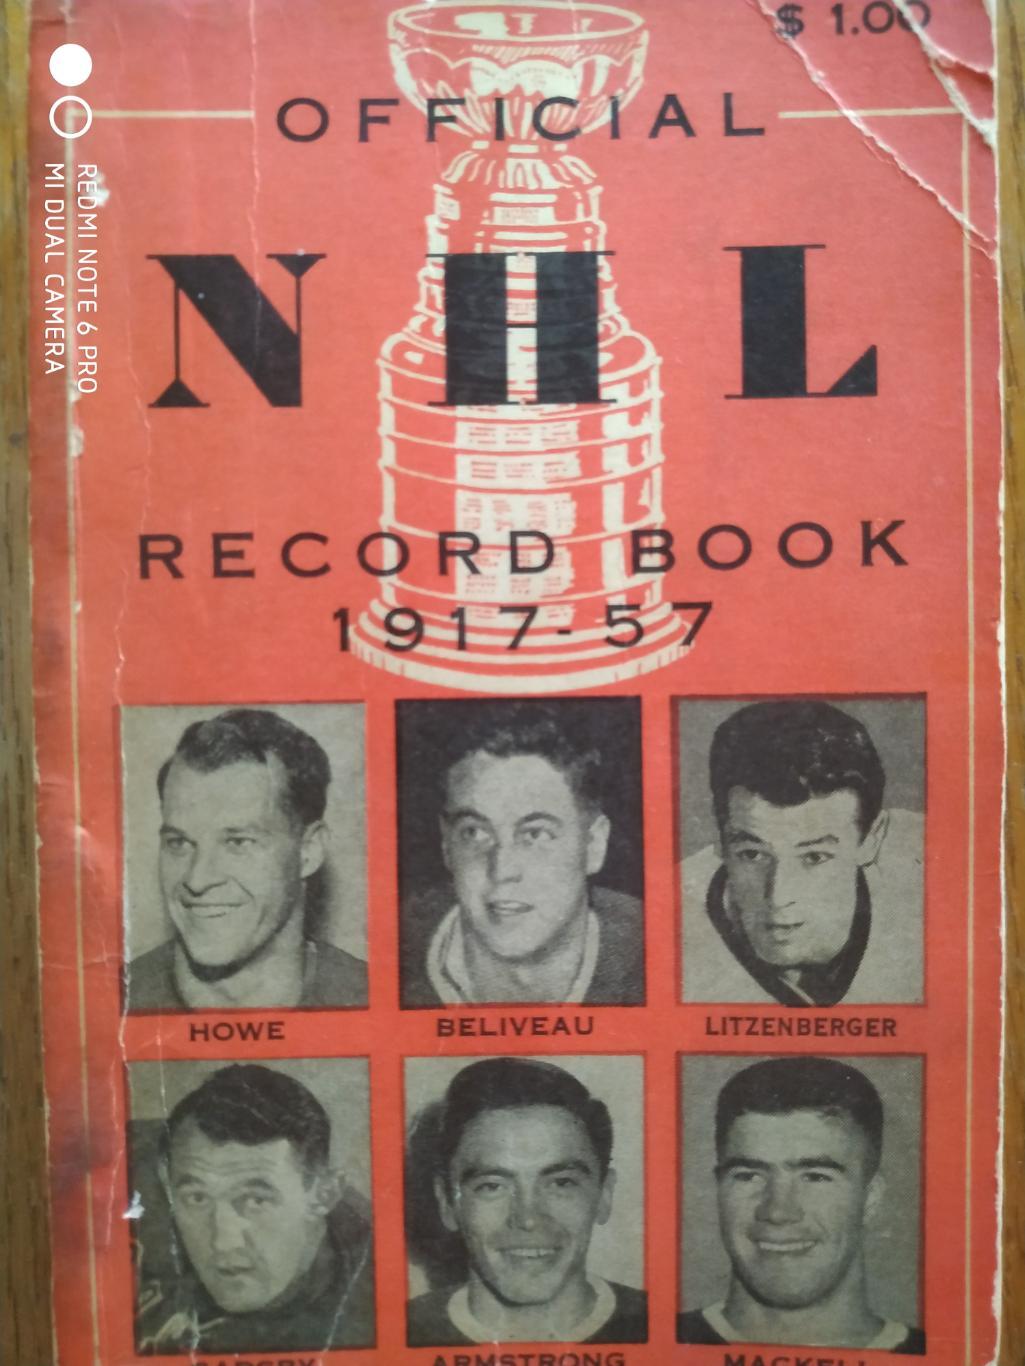 КНИГА НХЛ NHL POCKET BOOK 1917-57 NHL OFFICIAL RECORD BOOK